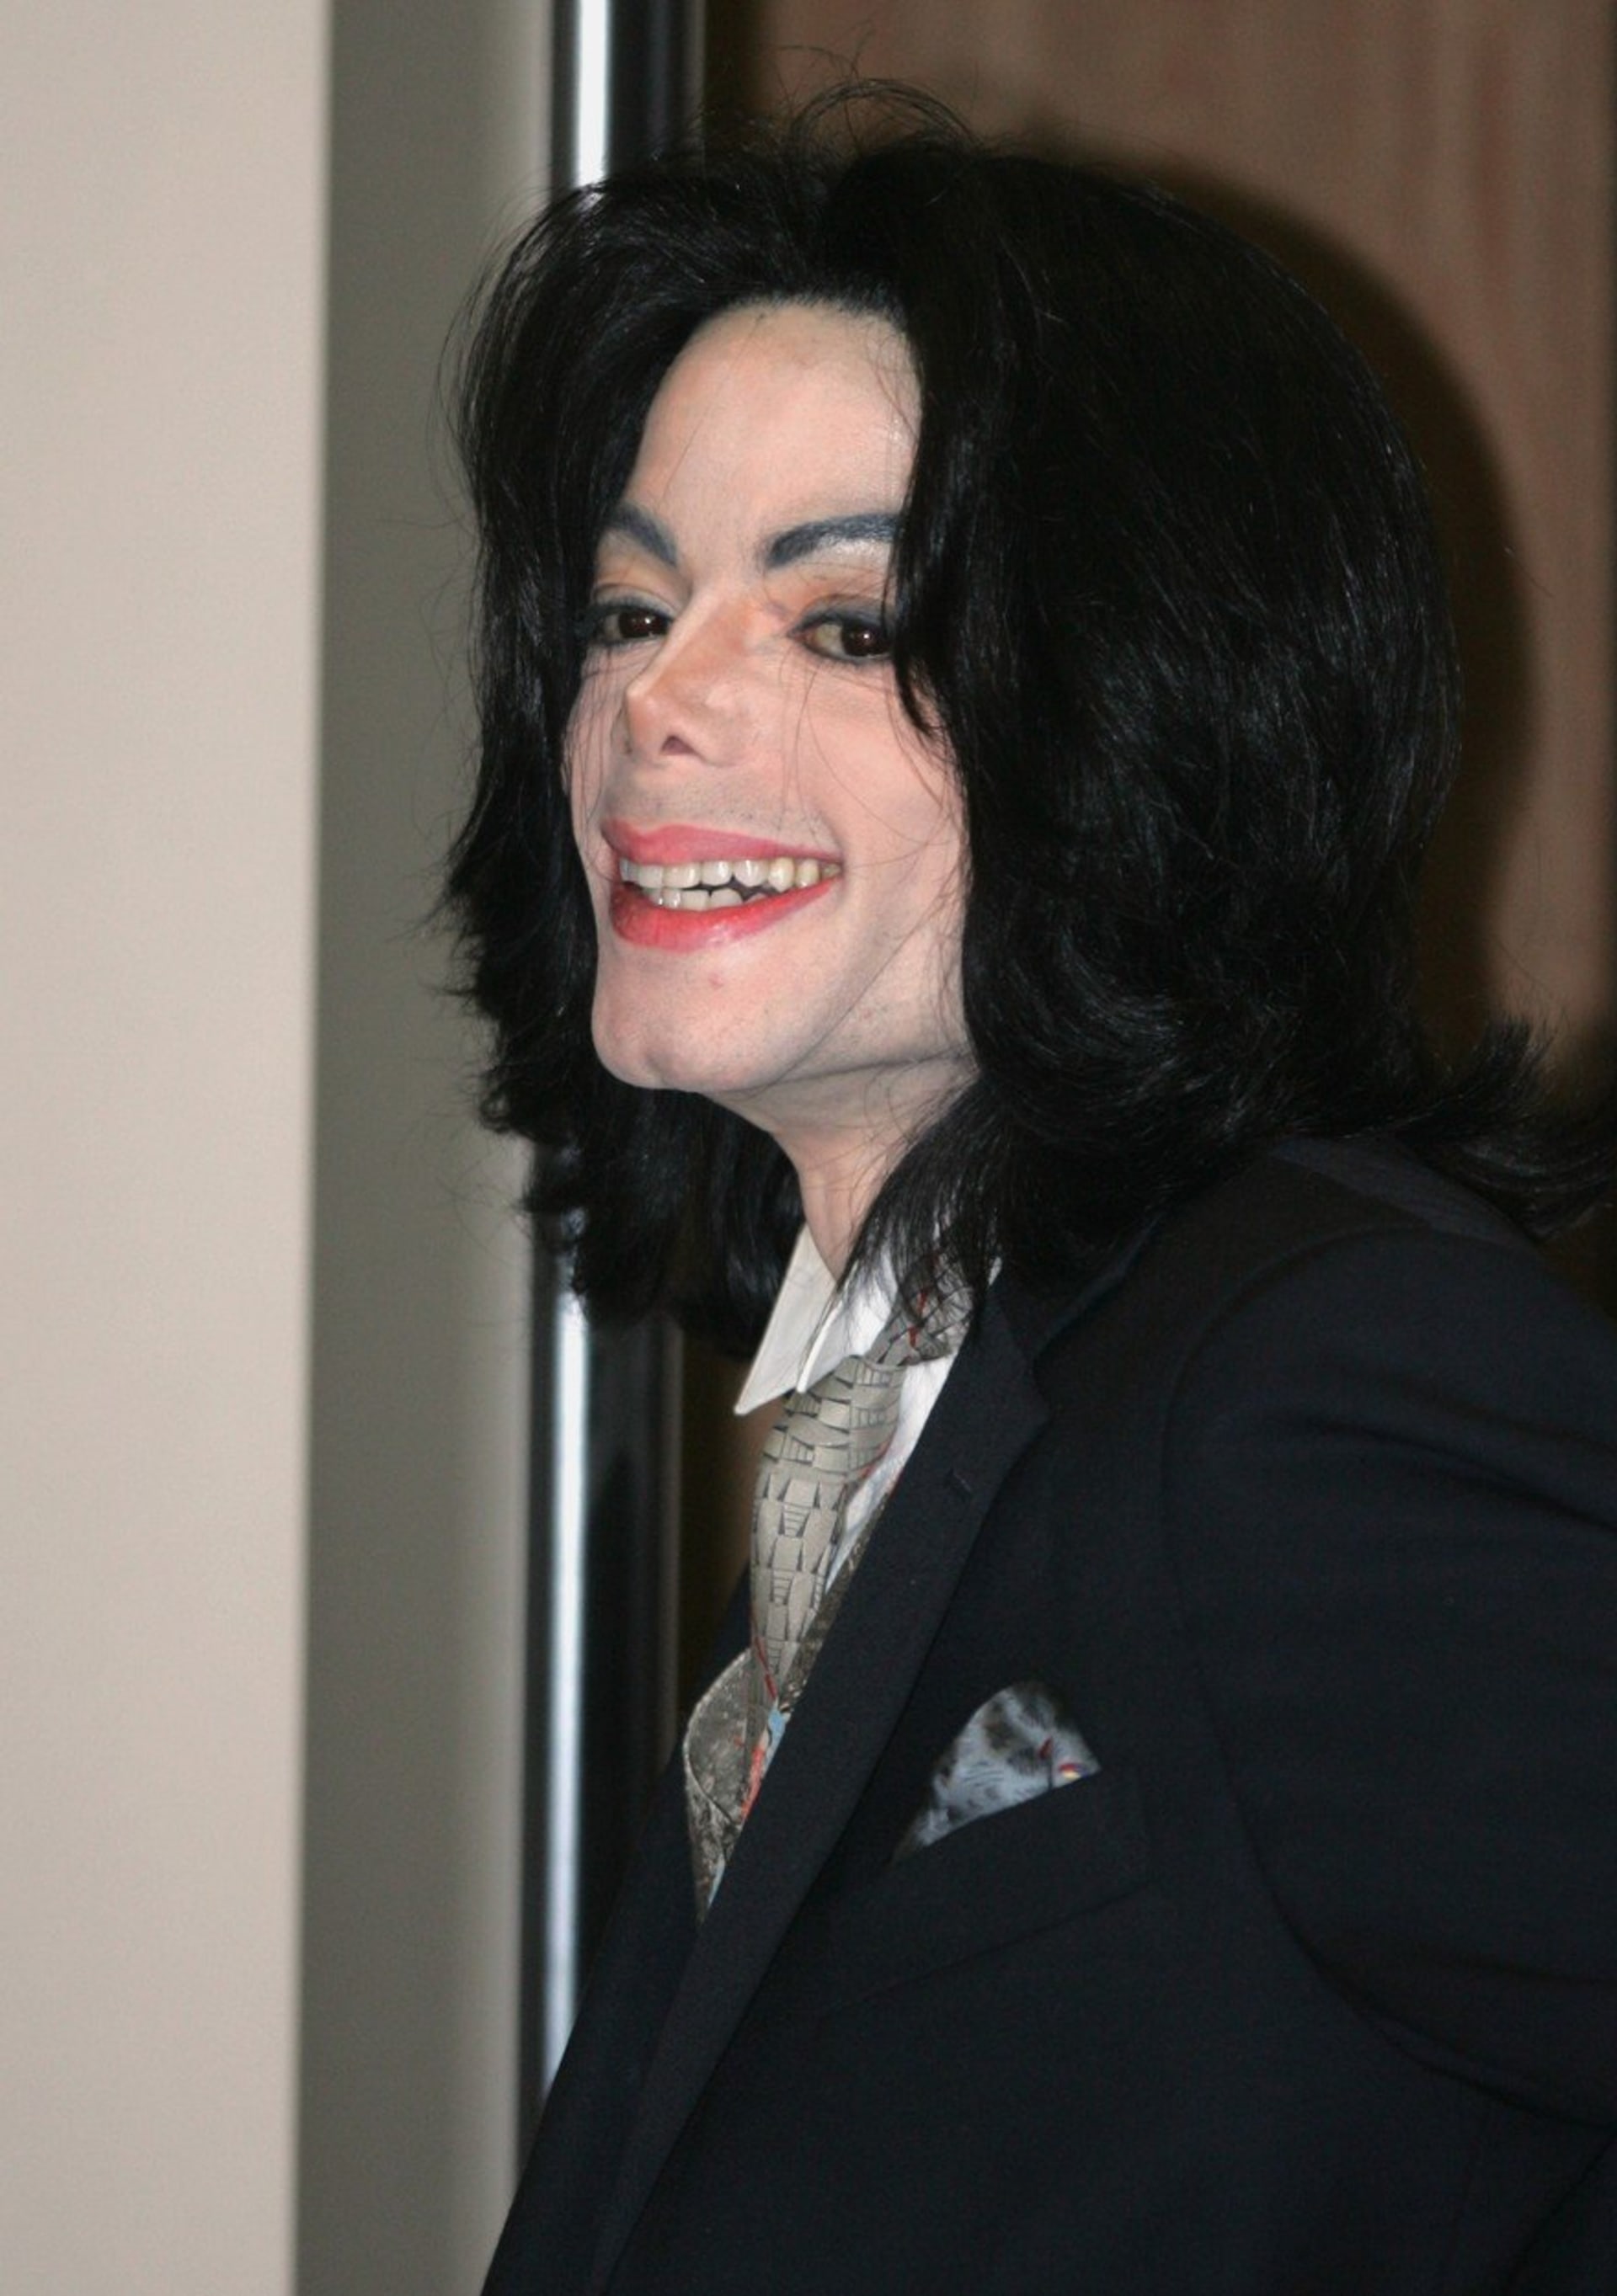 Fakta o případu Michaela Jacksona 2